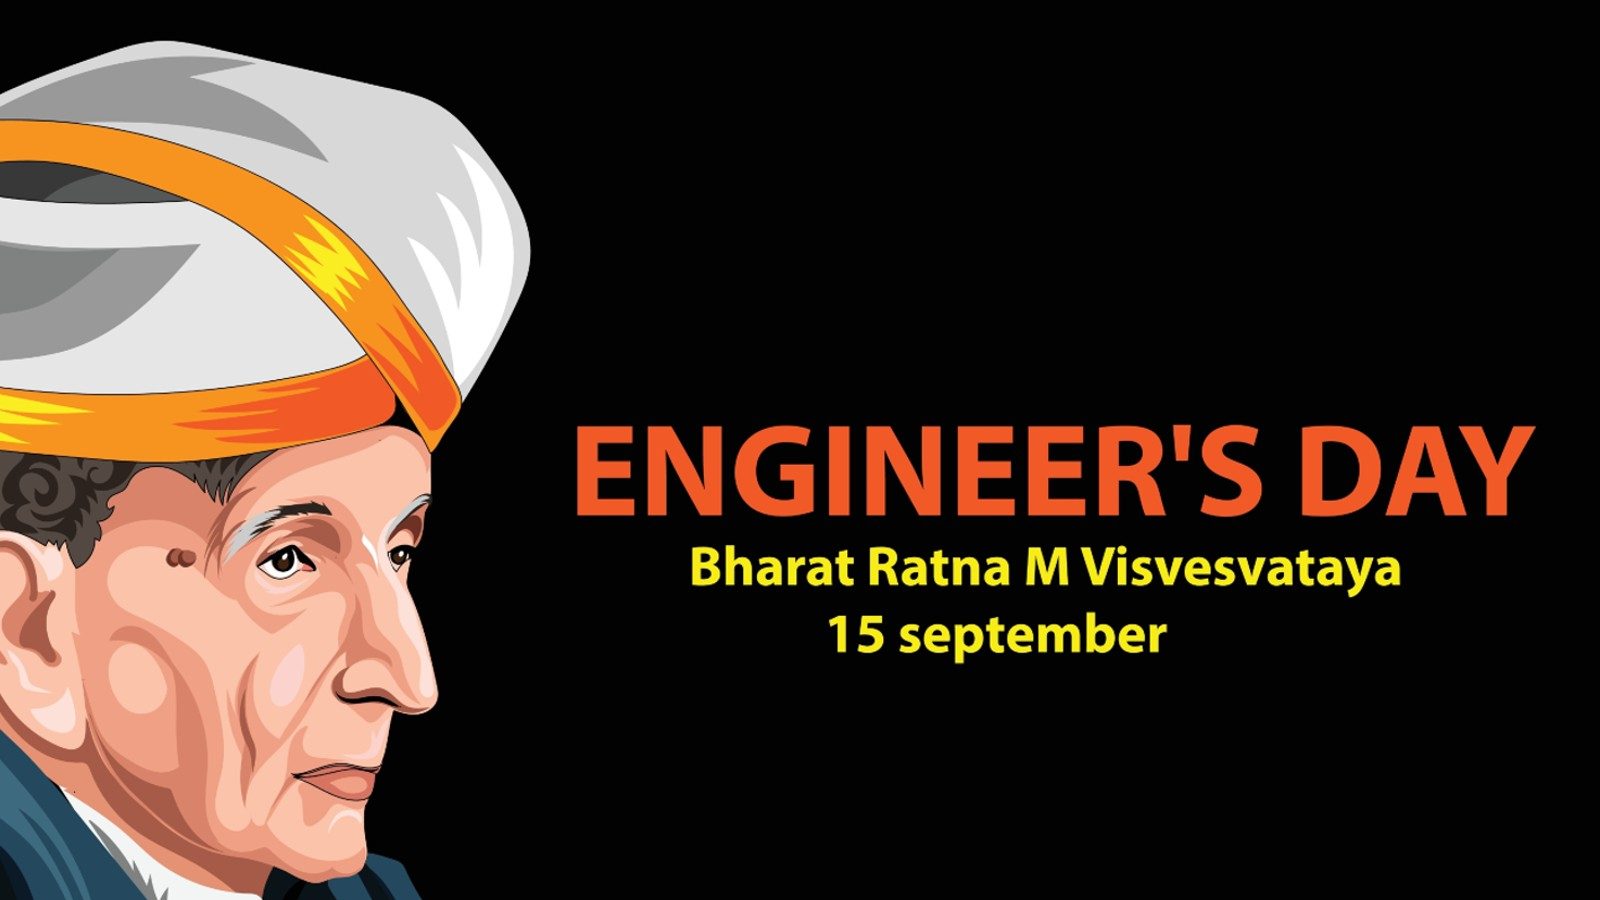 Engineer's Day 2022: Interesting Facts About M Visvesvaraya ...